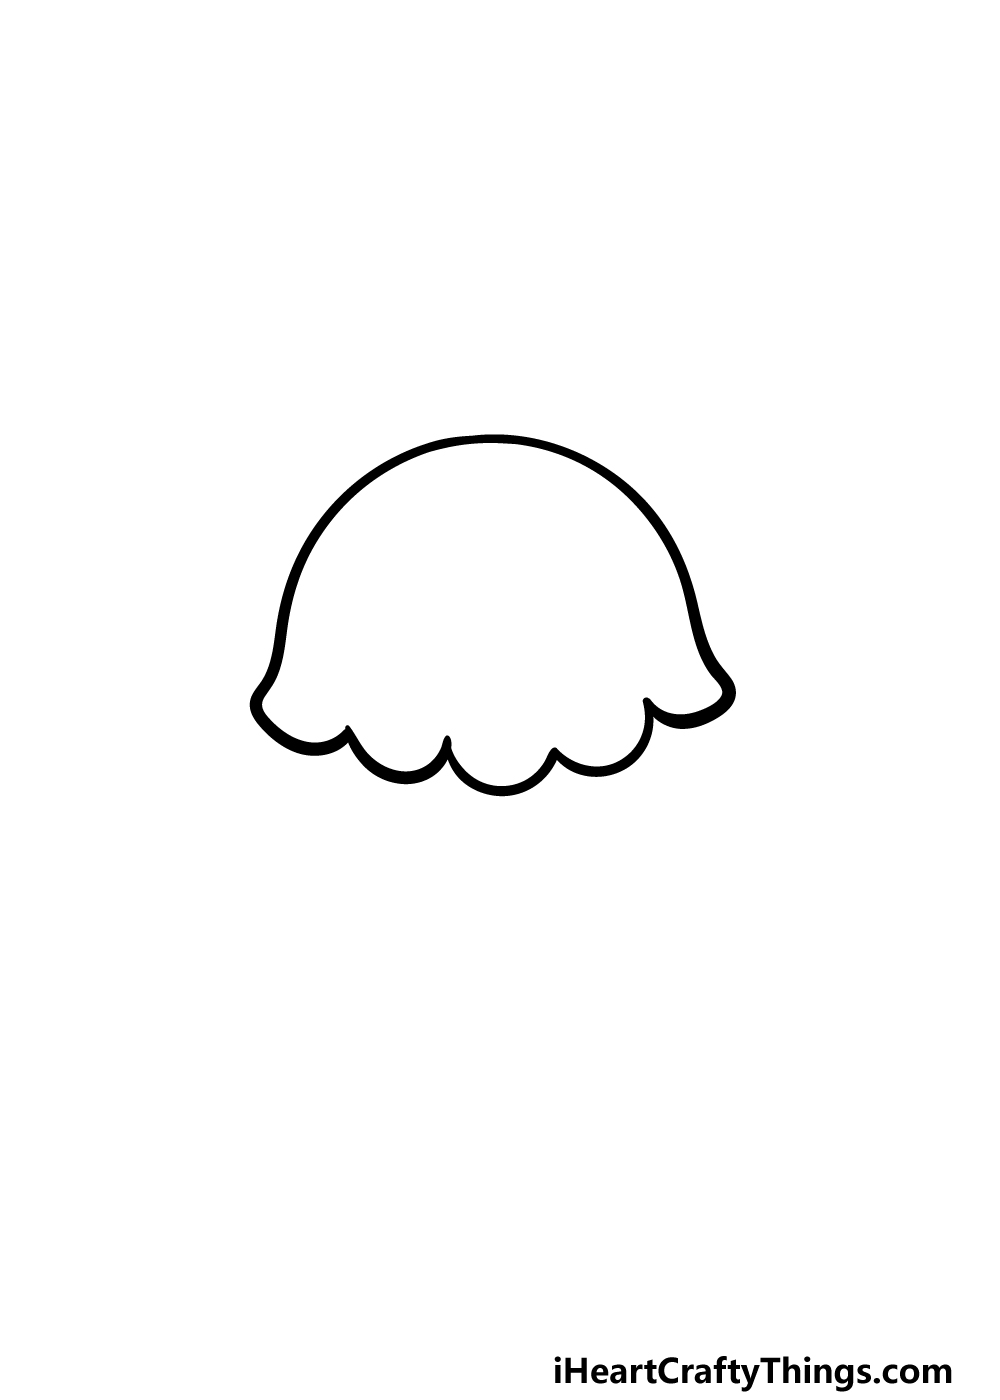 How to Draw A Cartoon Jellyfish step 2